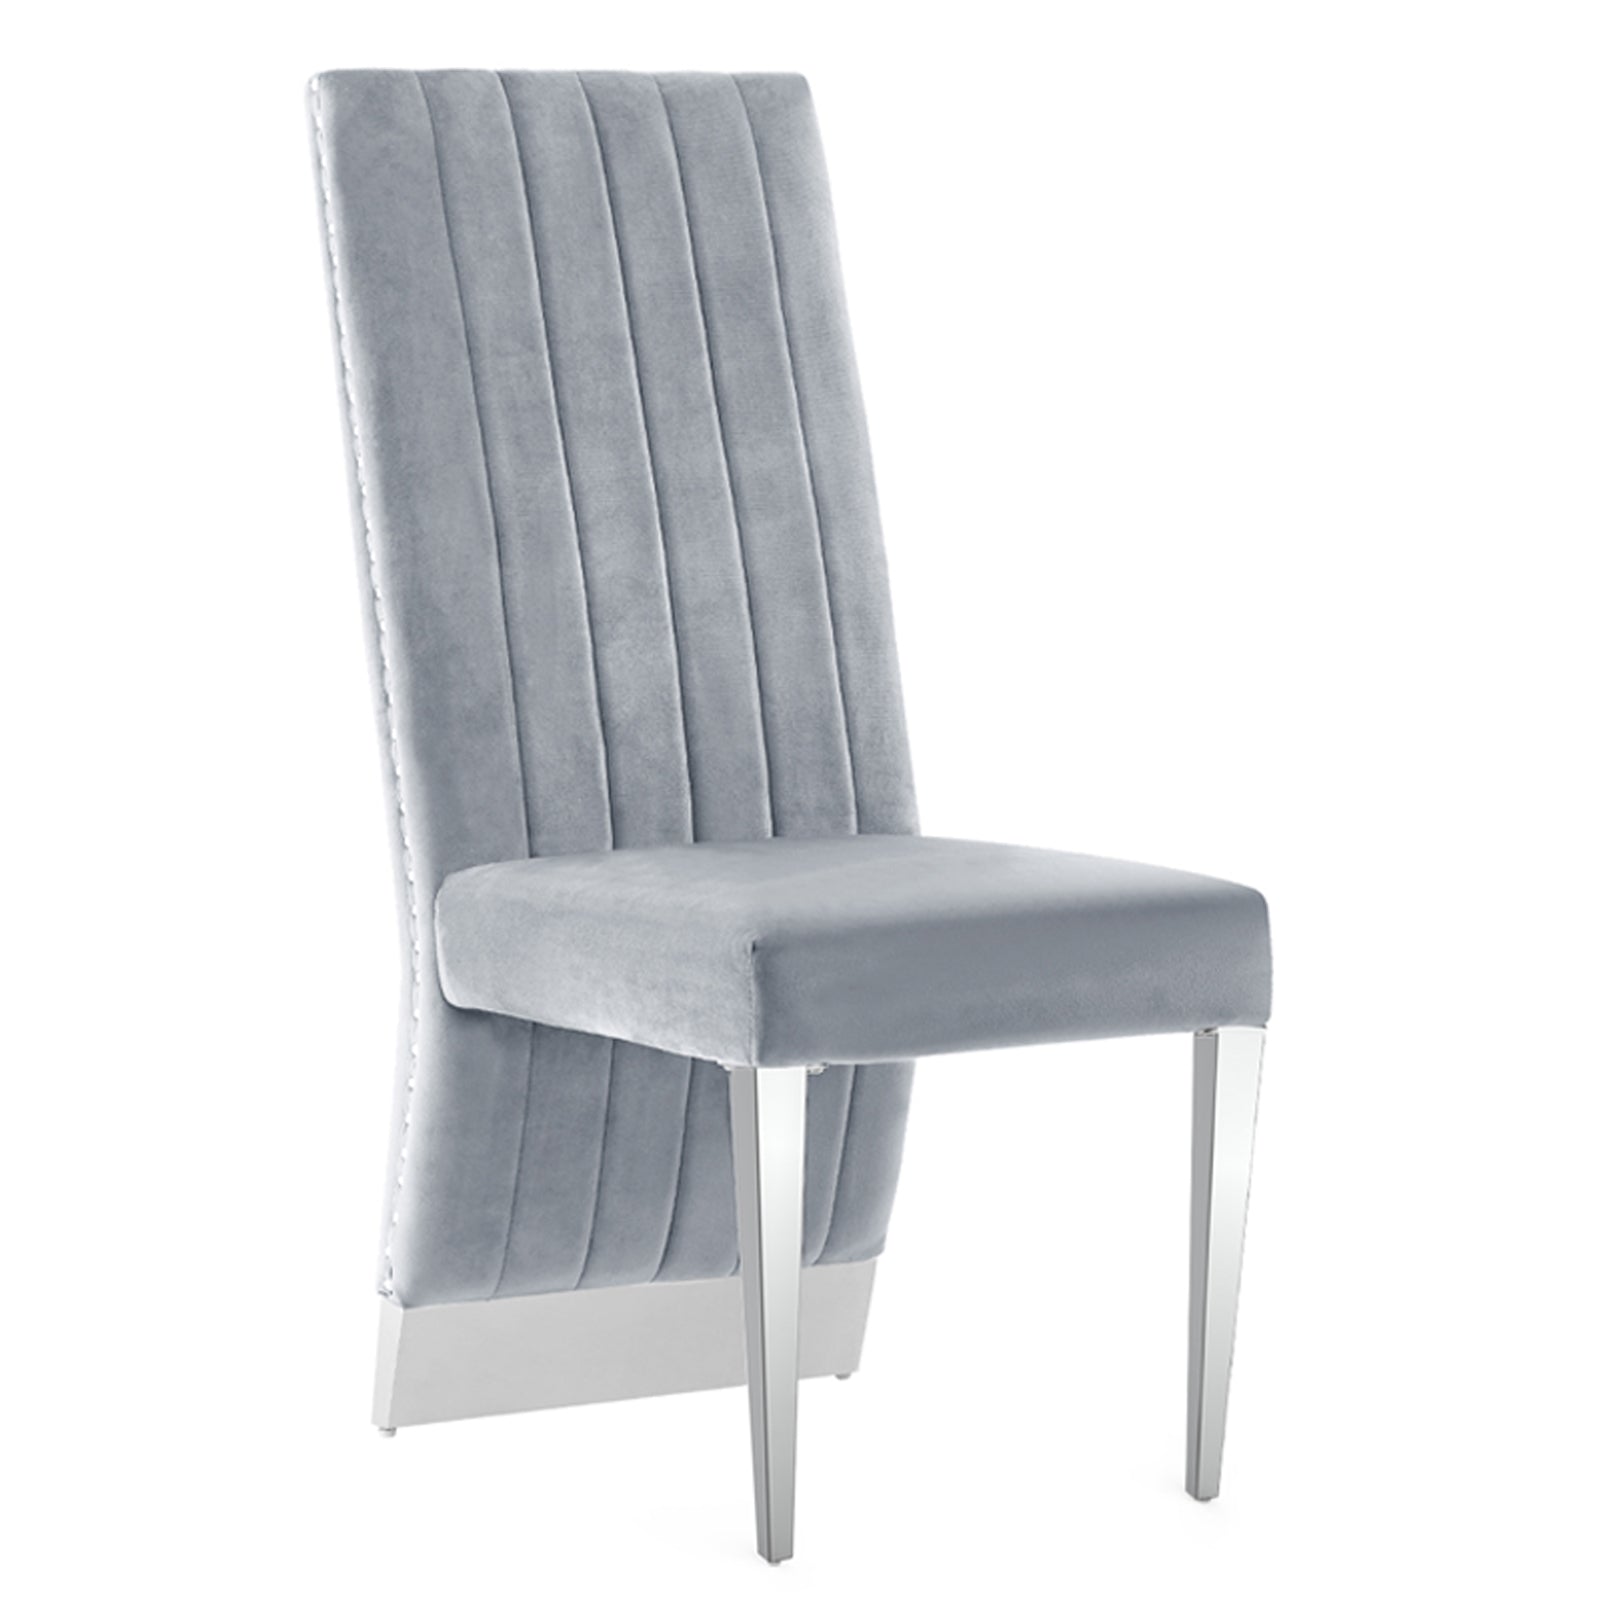 Gray Velvet Dining Chairs | Nailhead Trim | Silver Metal legs | C156